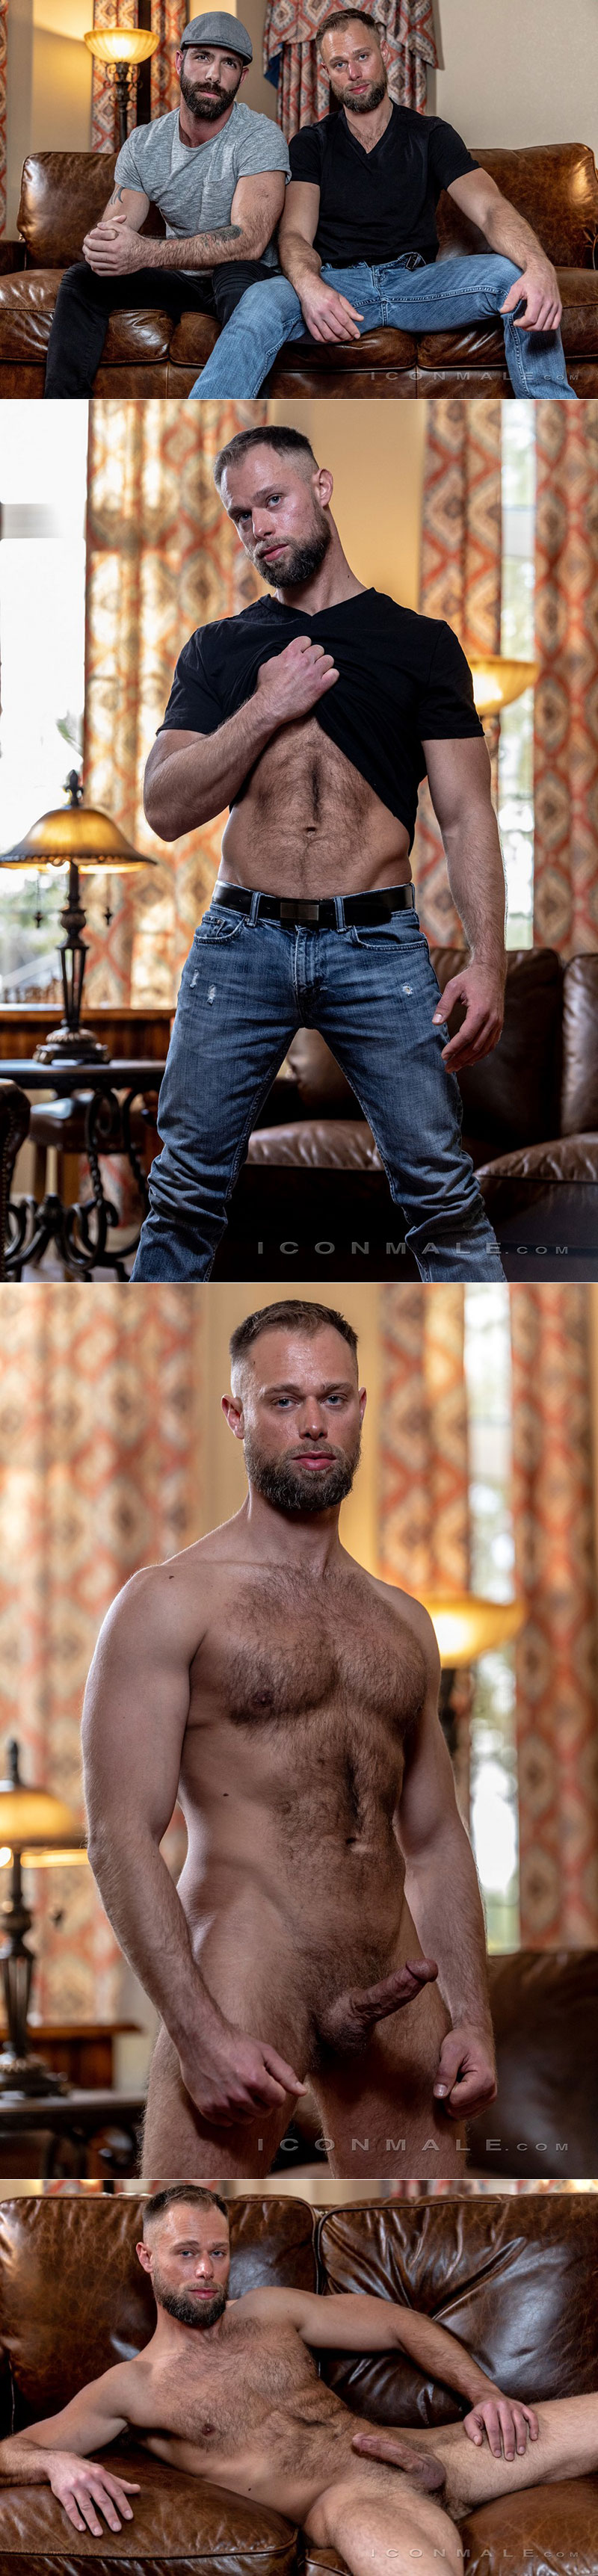 IconMale: Zayne Roman barebacks Jake Nicola in "Seducing The Straight Guy"